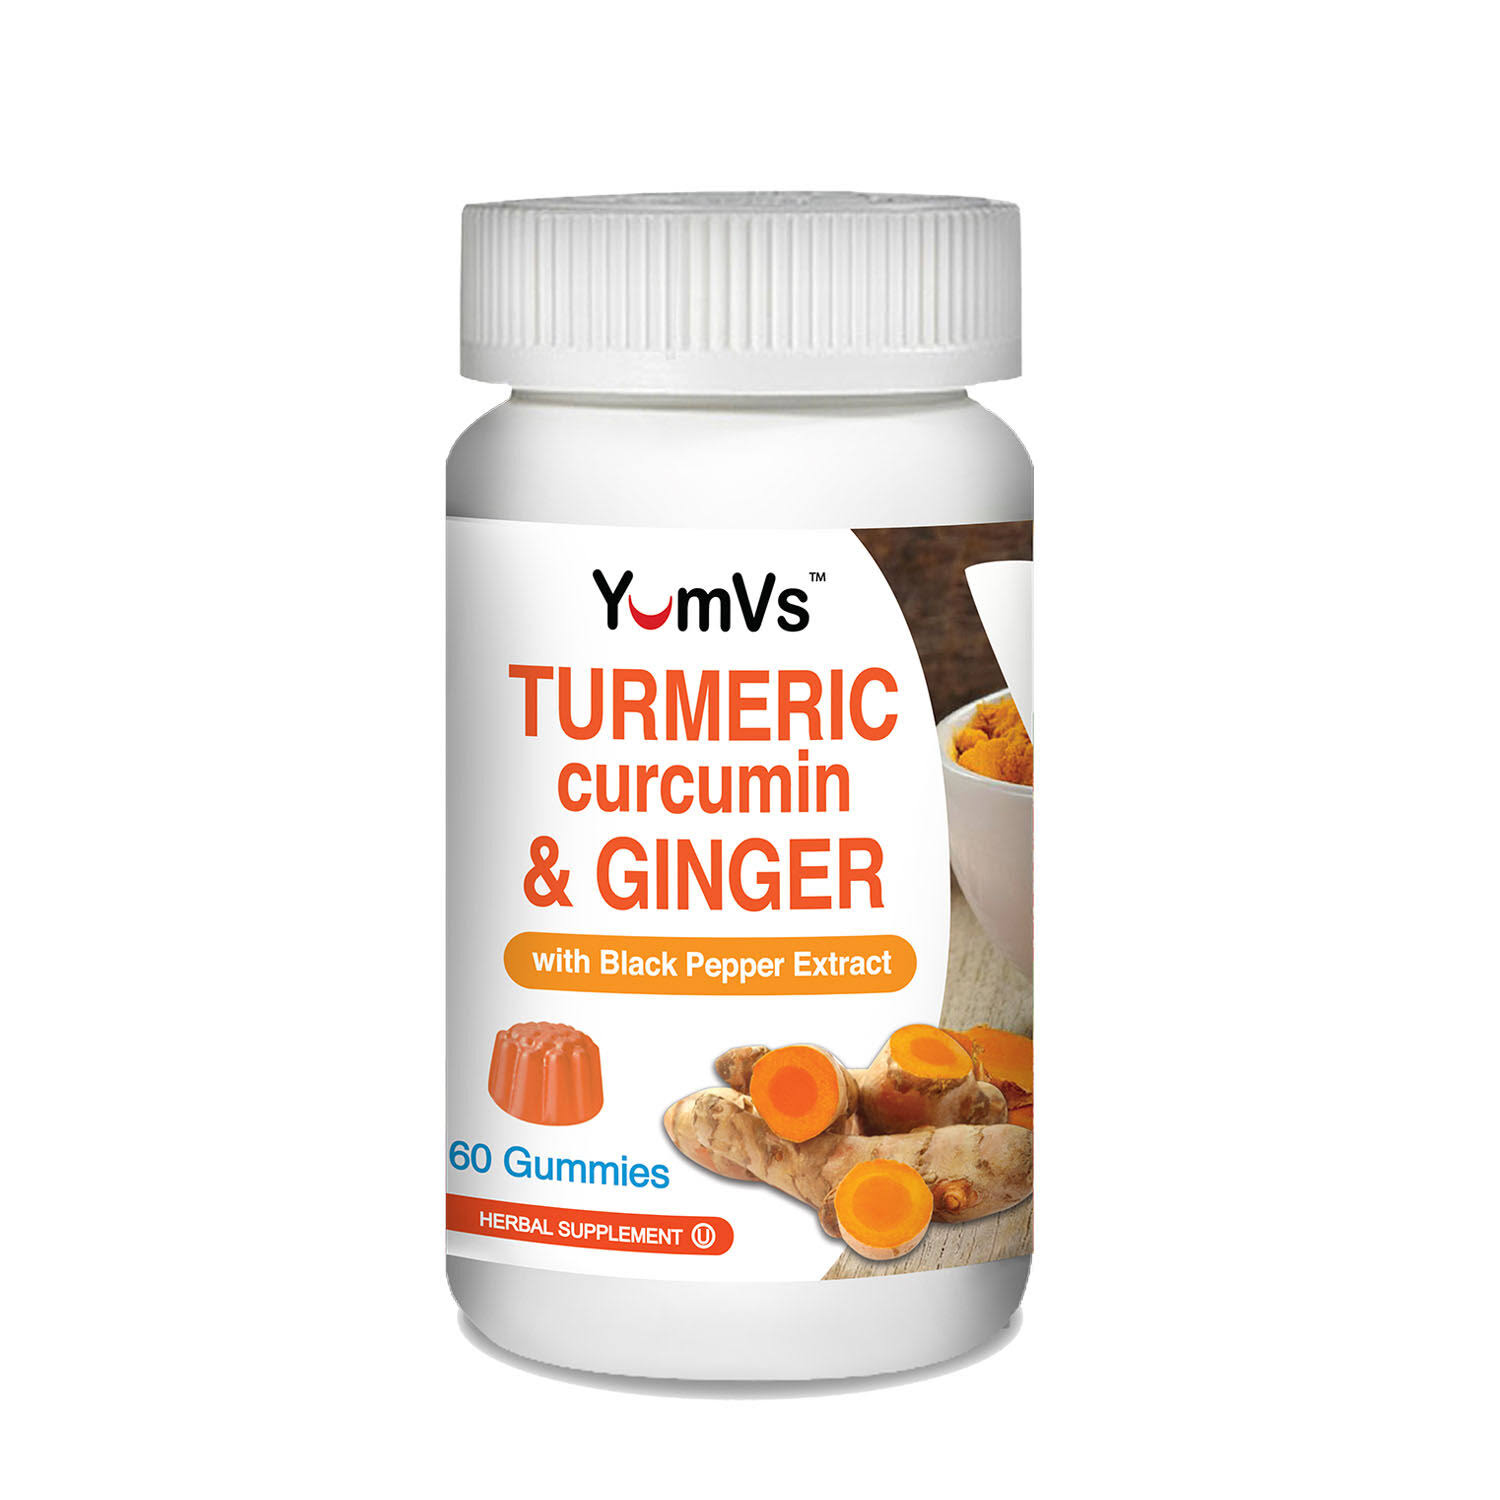 Yumvs Turmeric Curcumin & Ginger, Gummies - 60 gummies